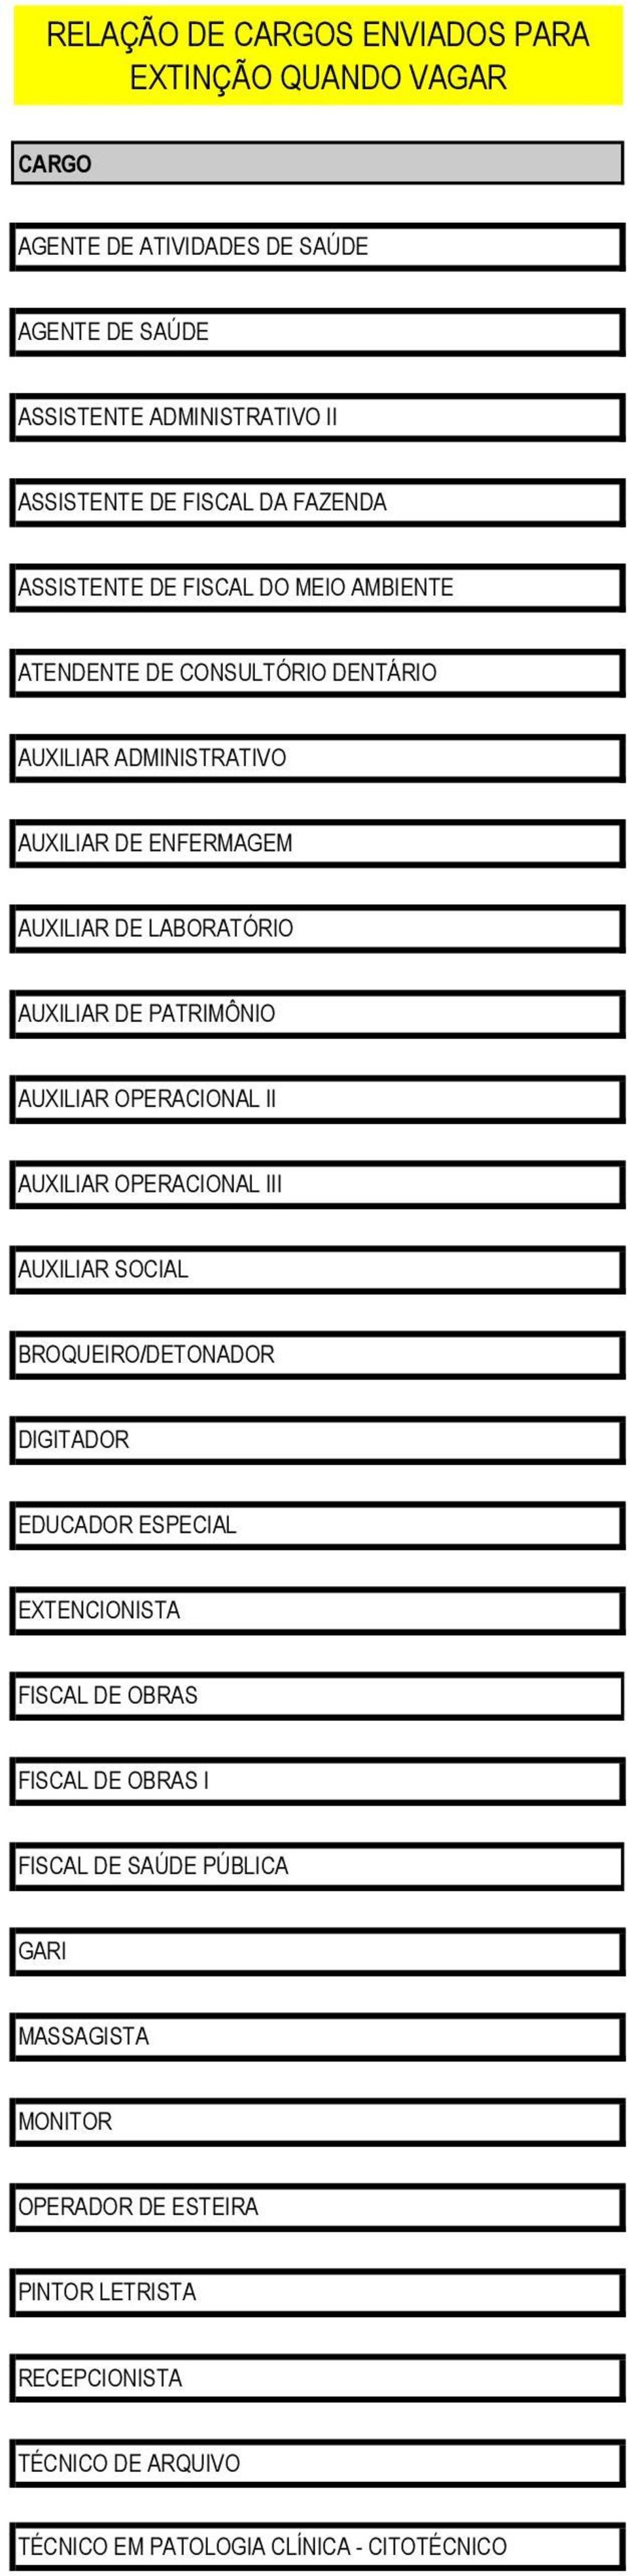 PATRIMÔNIO AUXILIAR OPERACIONAL II AUXILIAR OPERACIONAL III AUXILIAR SOCIAL BROQUEIRO/DETONADOR DIGITADOR EDUCADOR ESPECIAL EXTENCIONISTA FISCAL DE OBRAS FISCAL